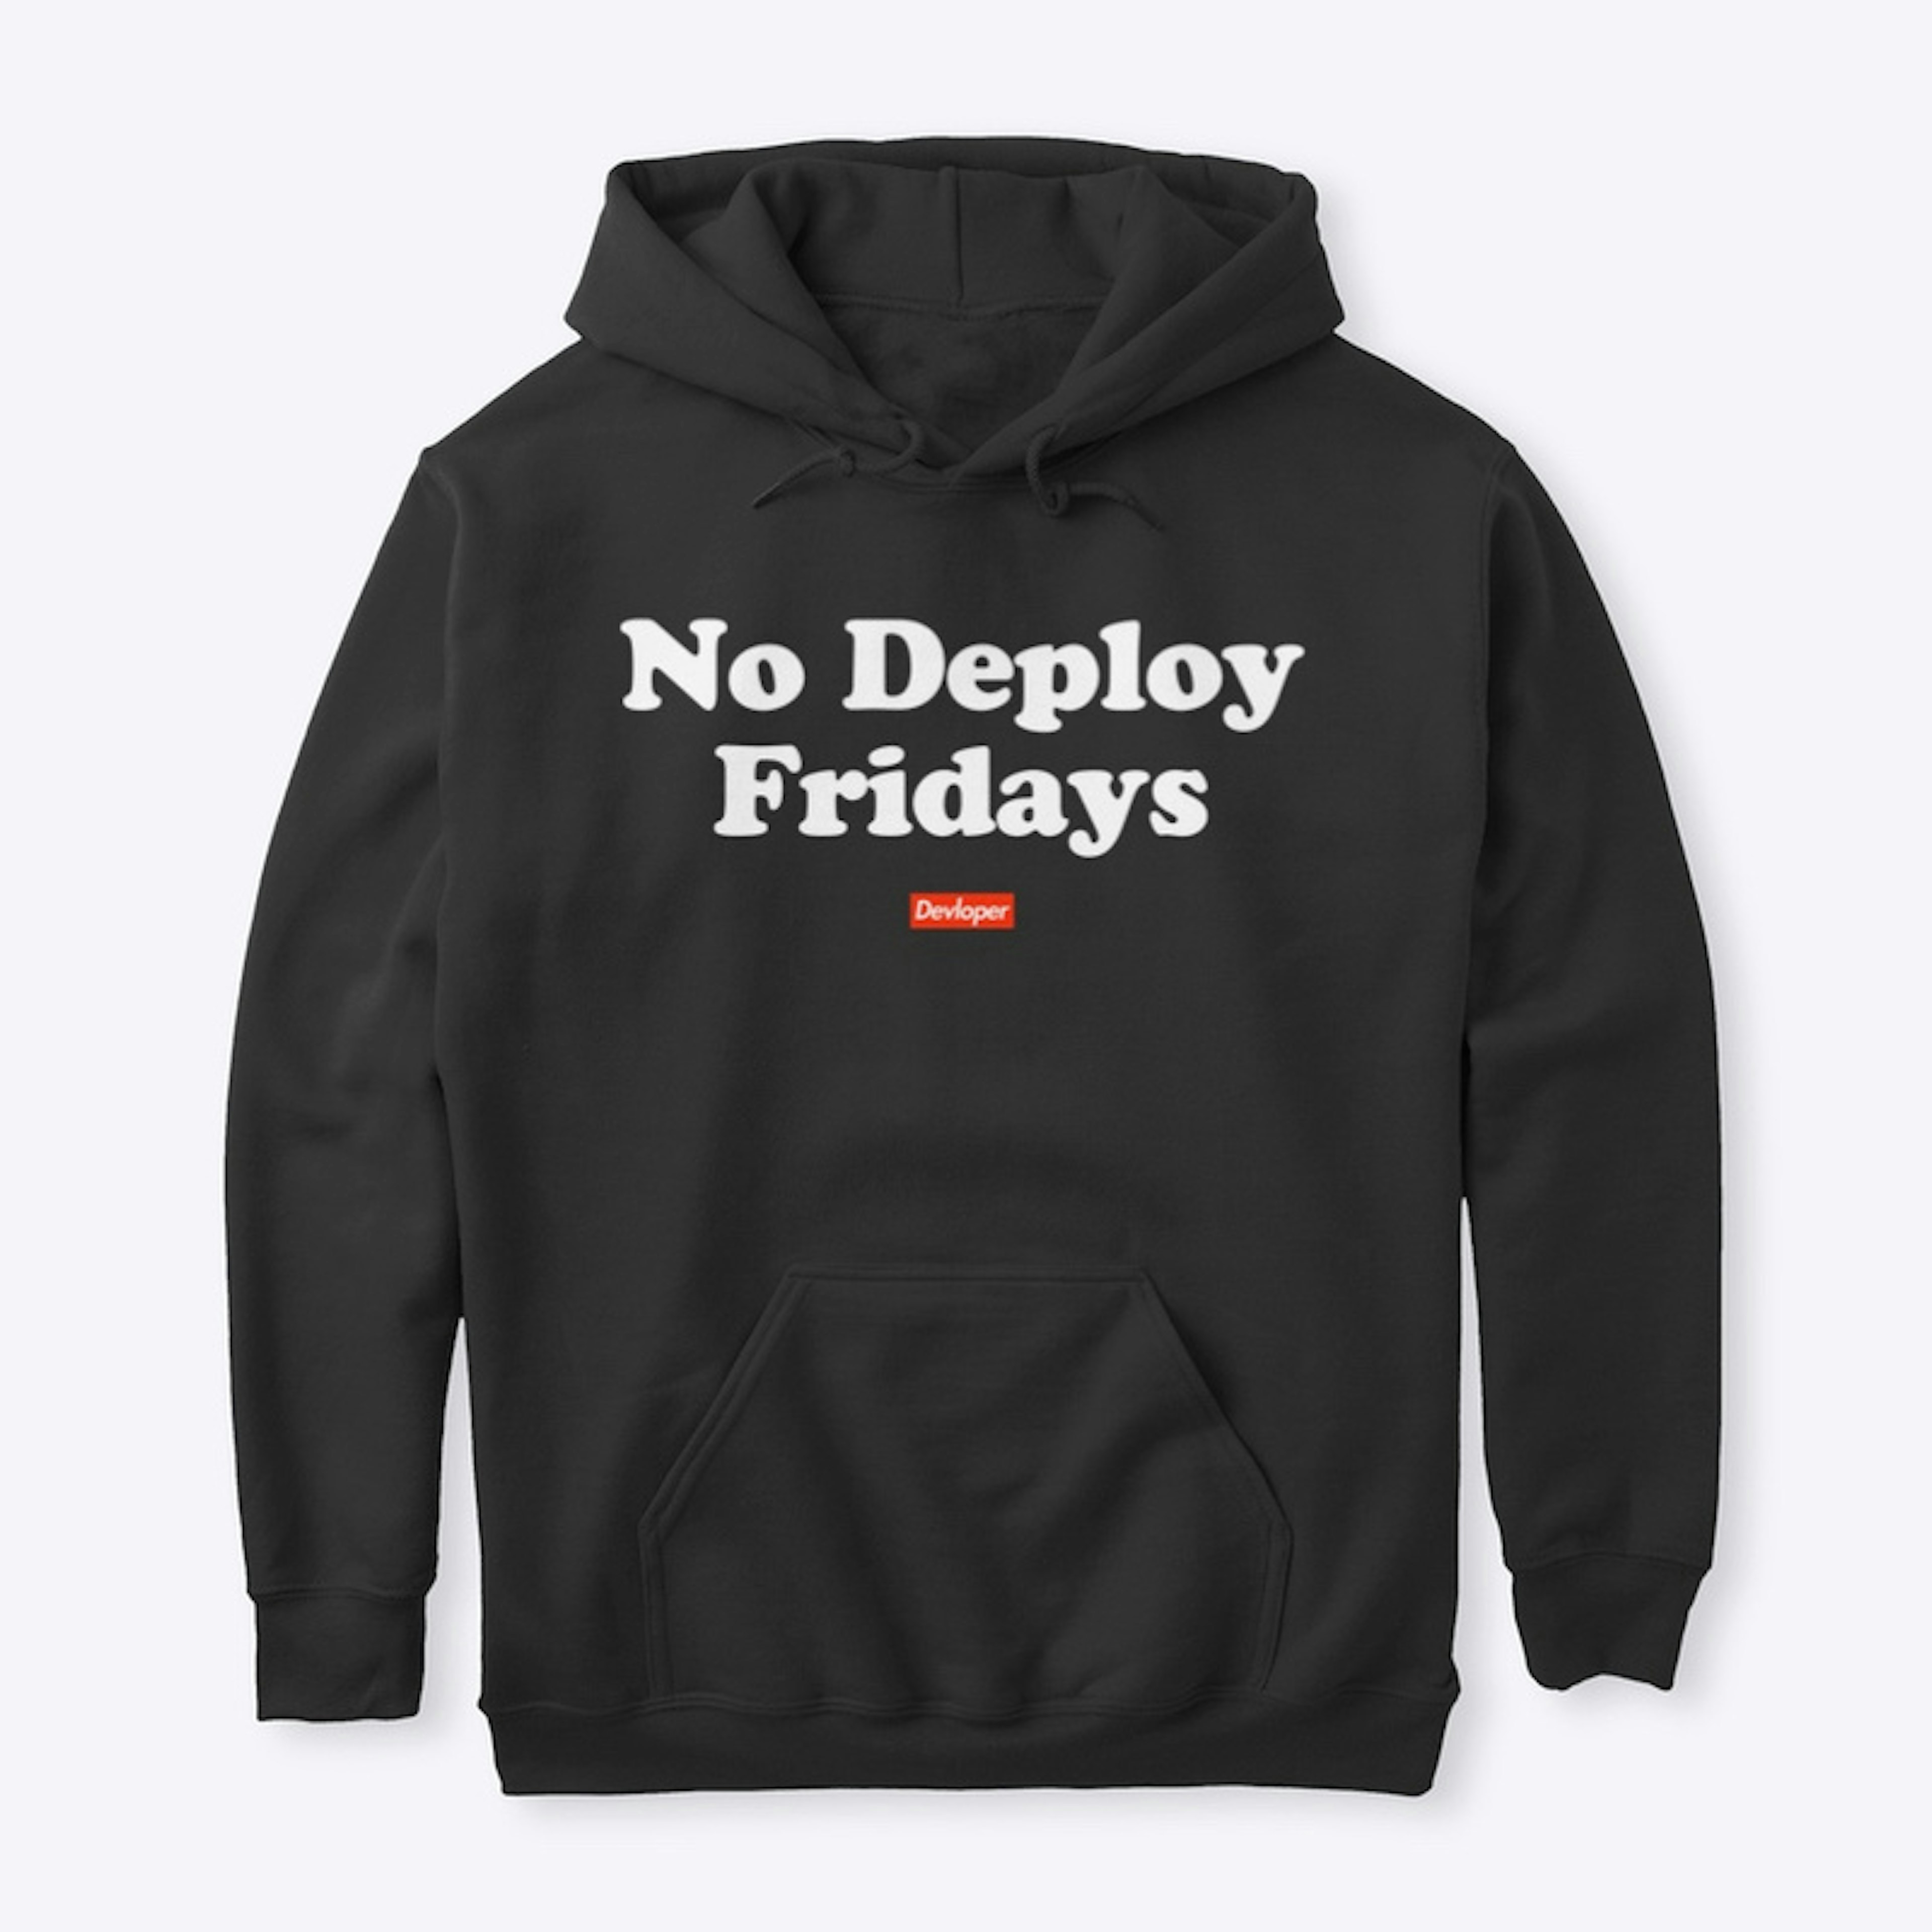 No Deploy Fridays Hoodie - dark